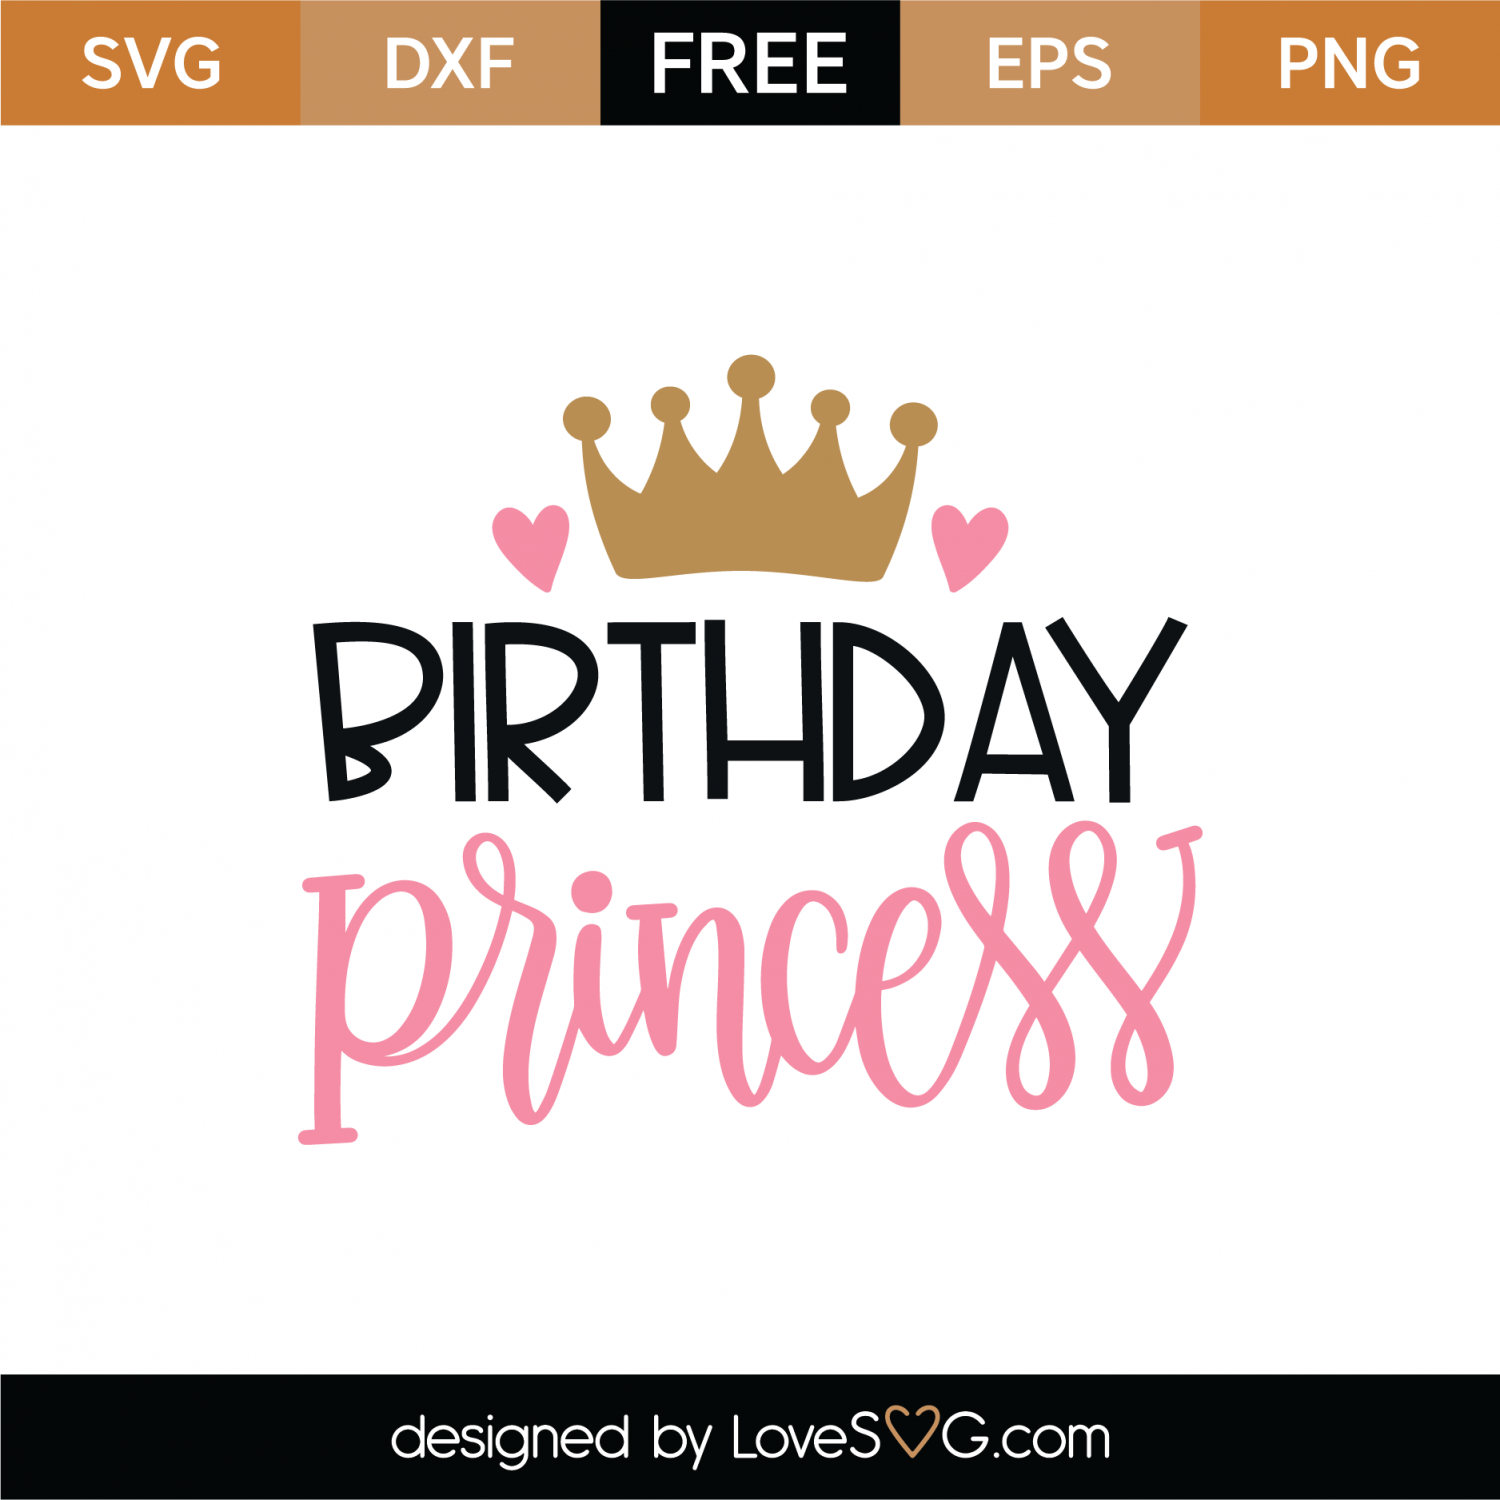 Free Birthday Princess SVG Cut File | Lovesvg.com